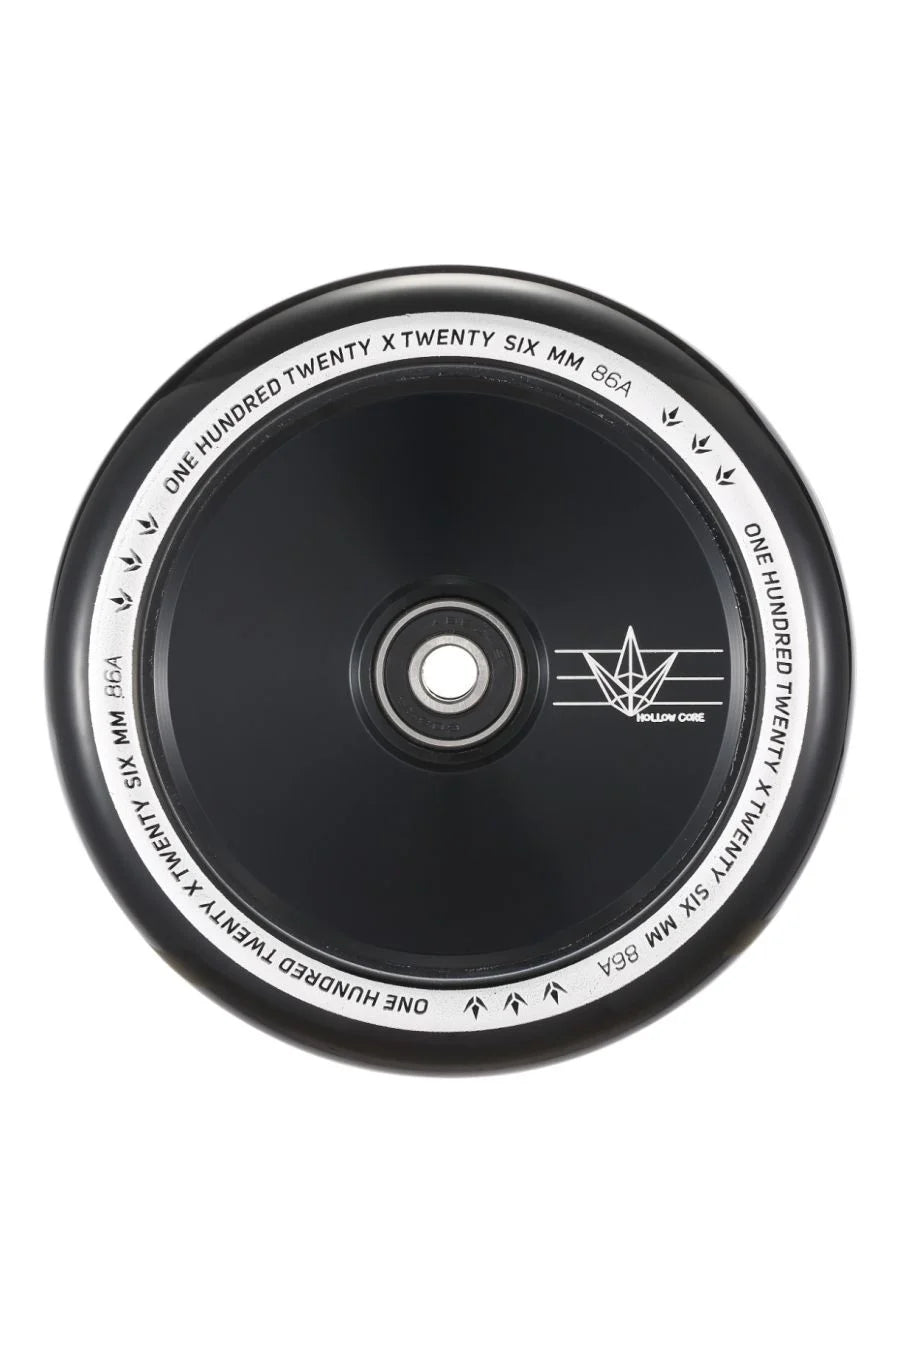 Blunt Envy Hollow Core 120mm Scooter Wheel - Black